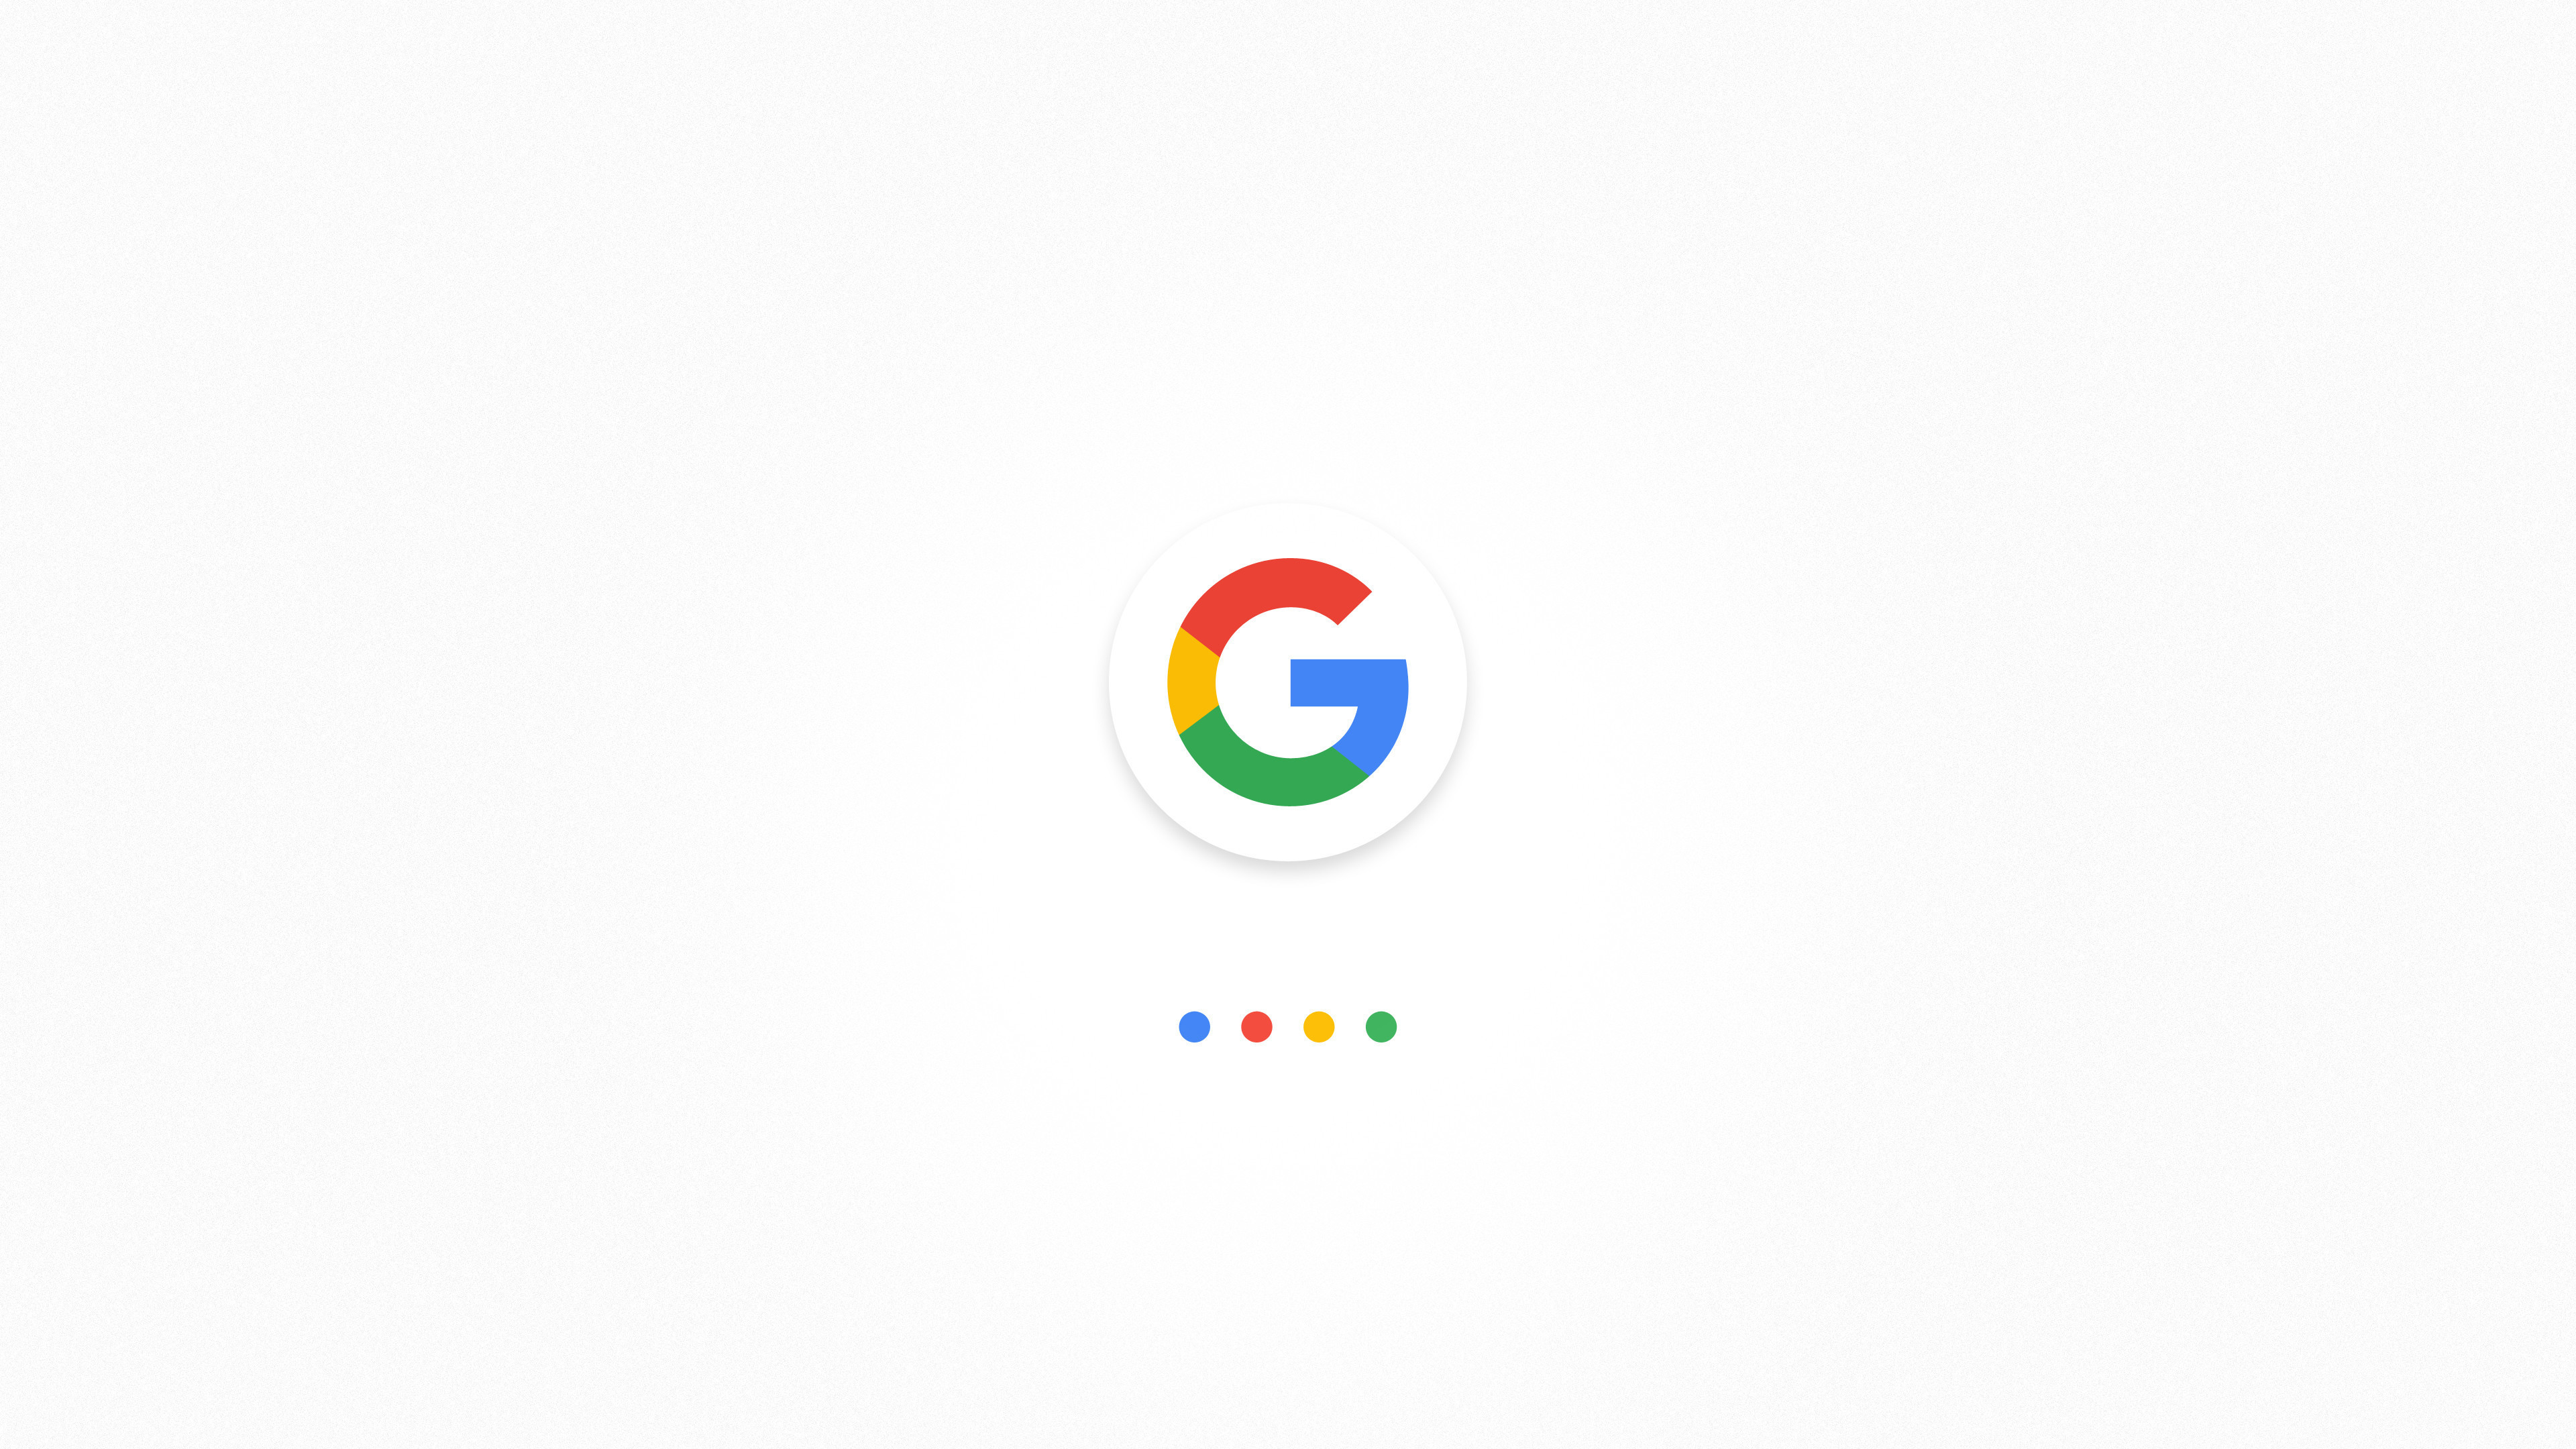 3840x2160 1920x1200 Google Plus Logo Desktop Background Images Oictures Google  Wallpaper Backgrounds